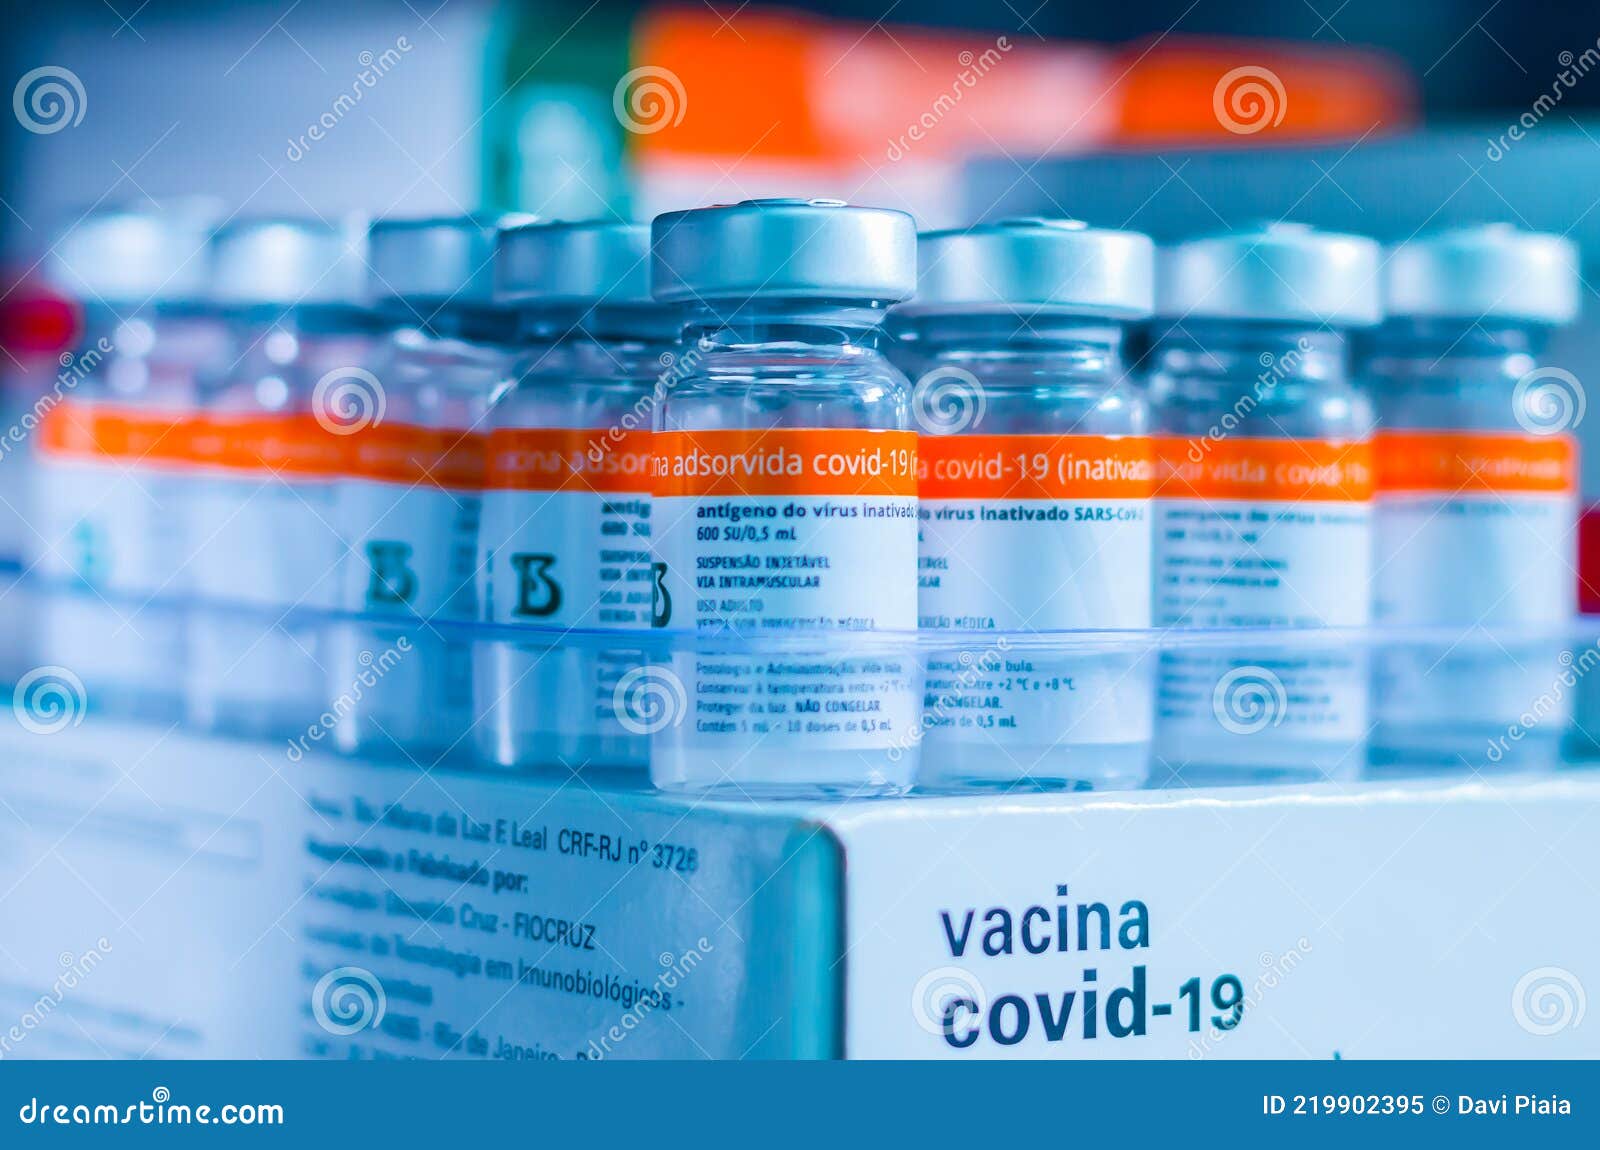 vacina covid-19 coronavac